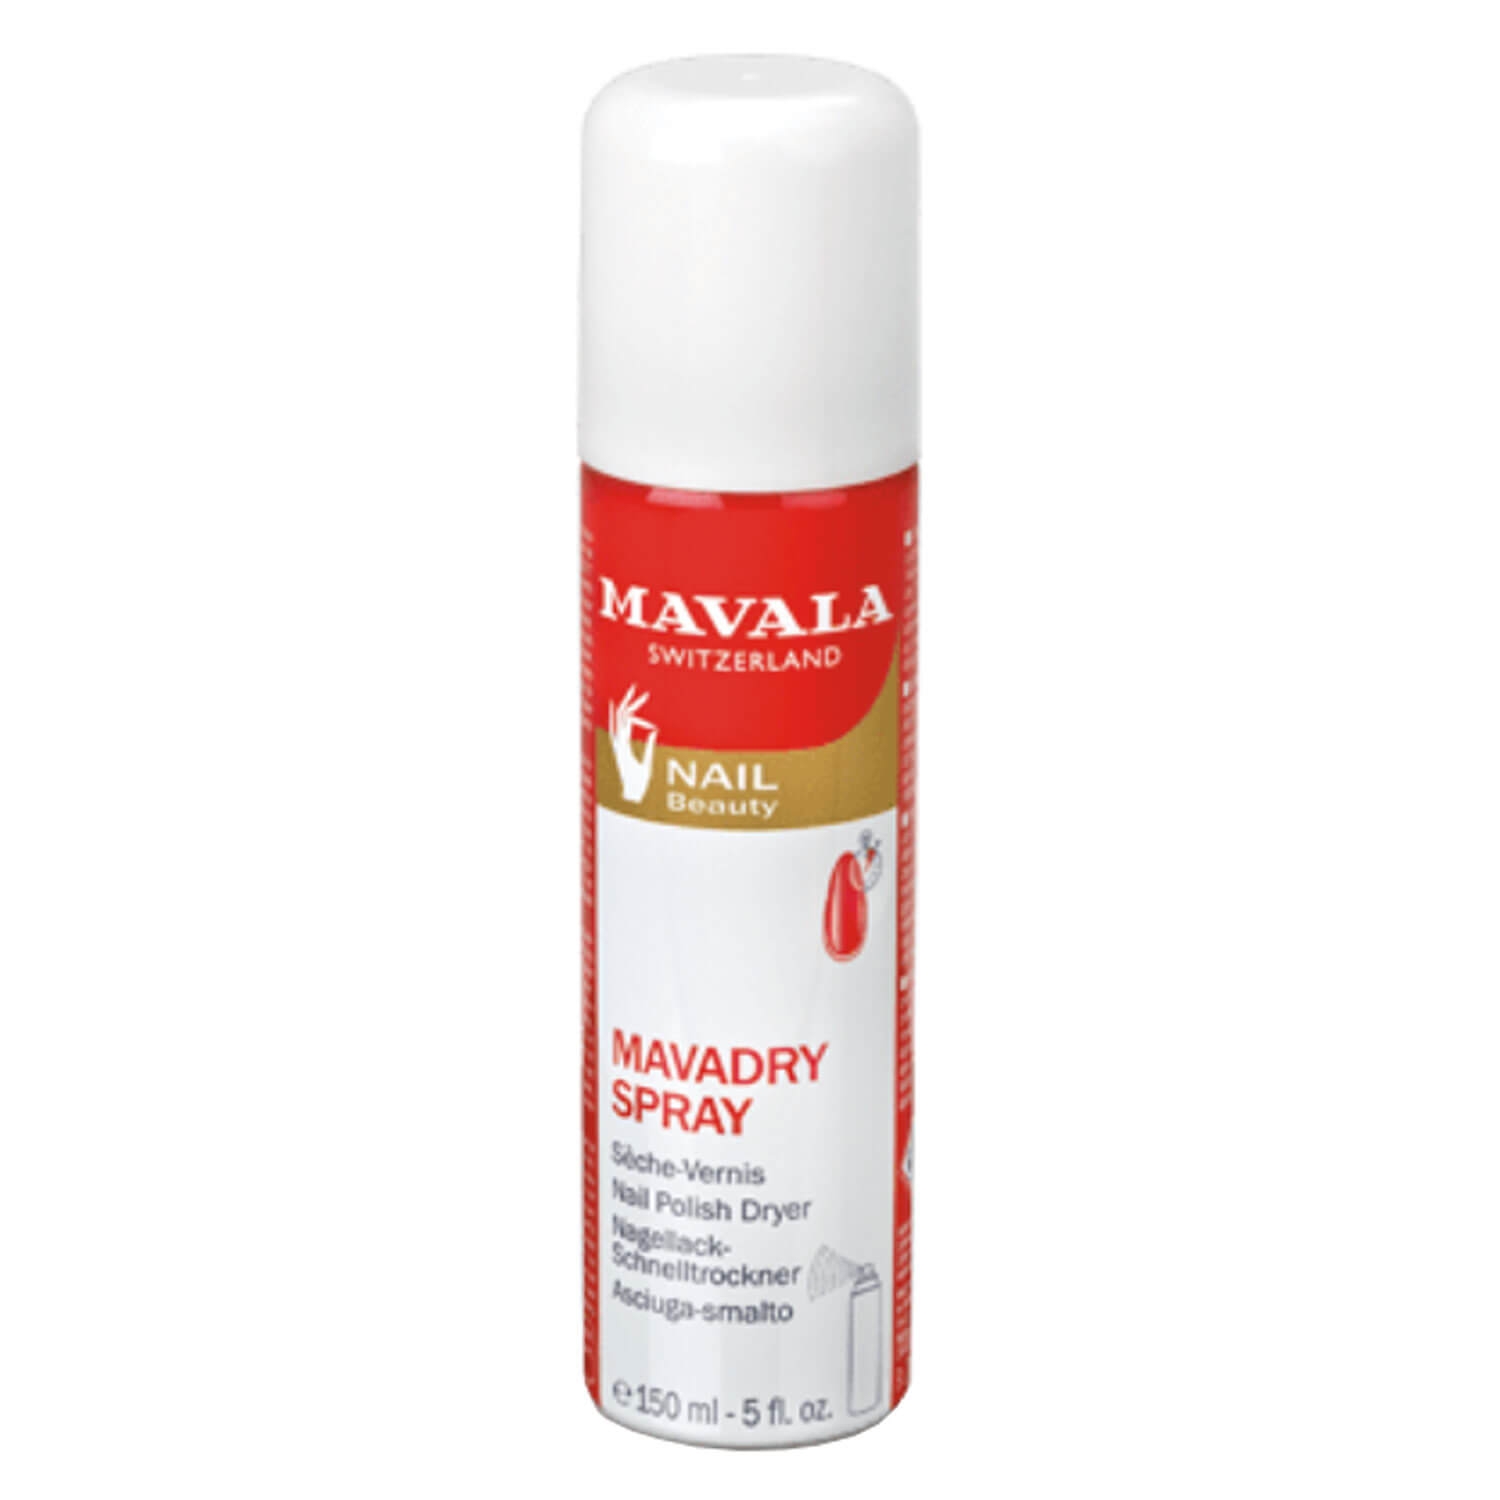 Image du produit de MAVALA Care - Mavadry Spray